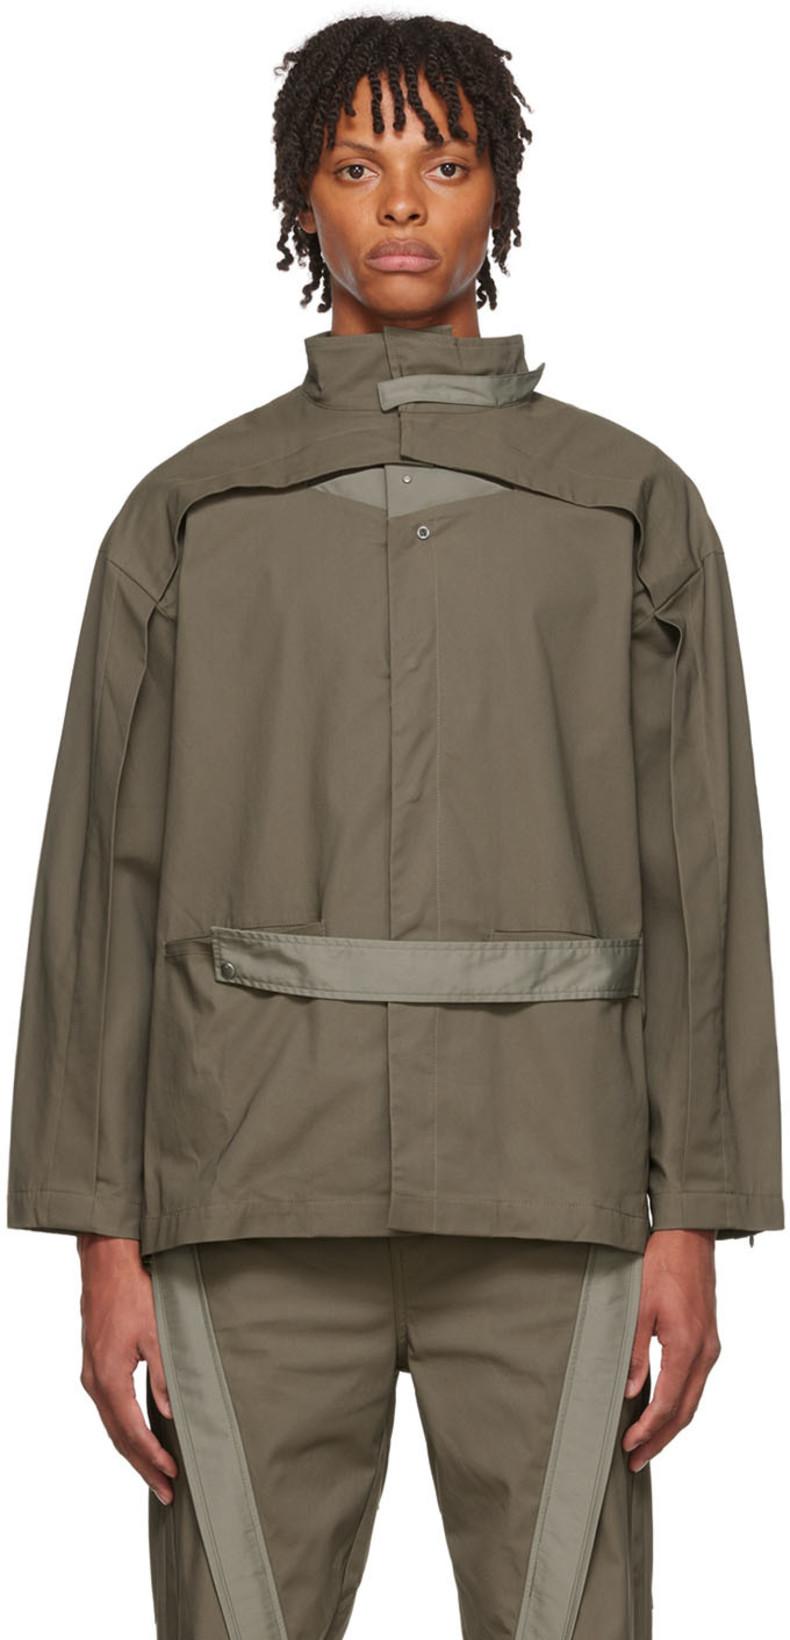 Gray Uniform Jacket by AENRMOUS